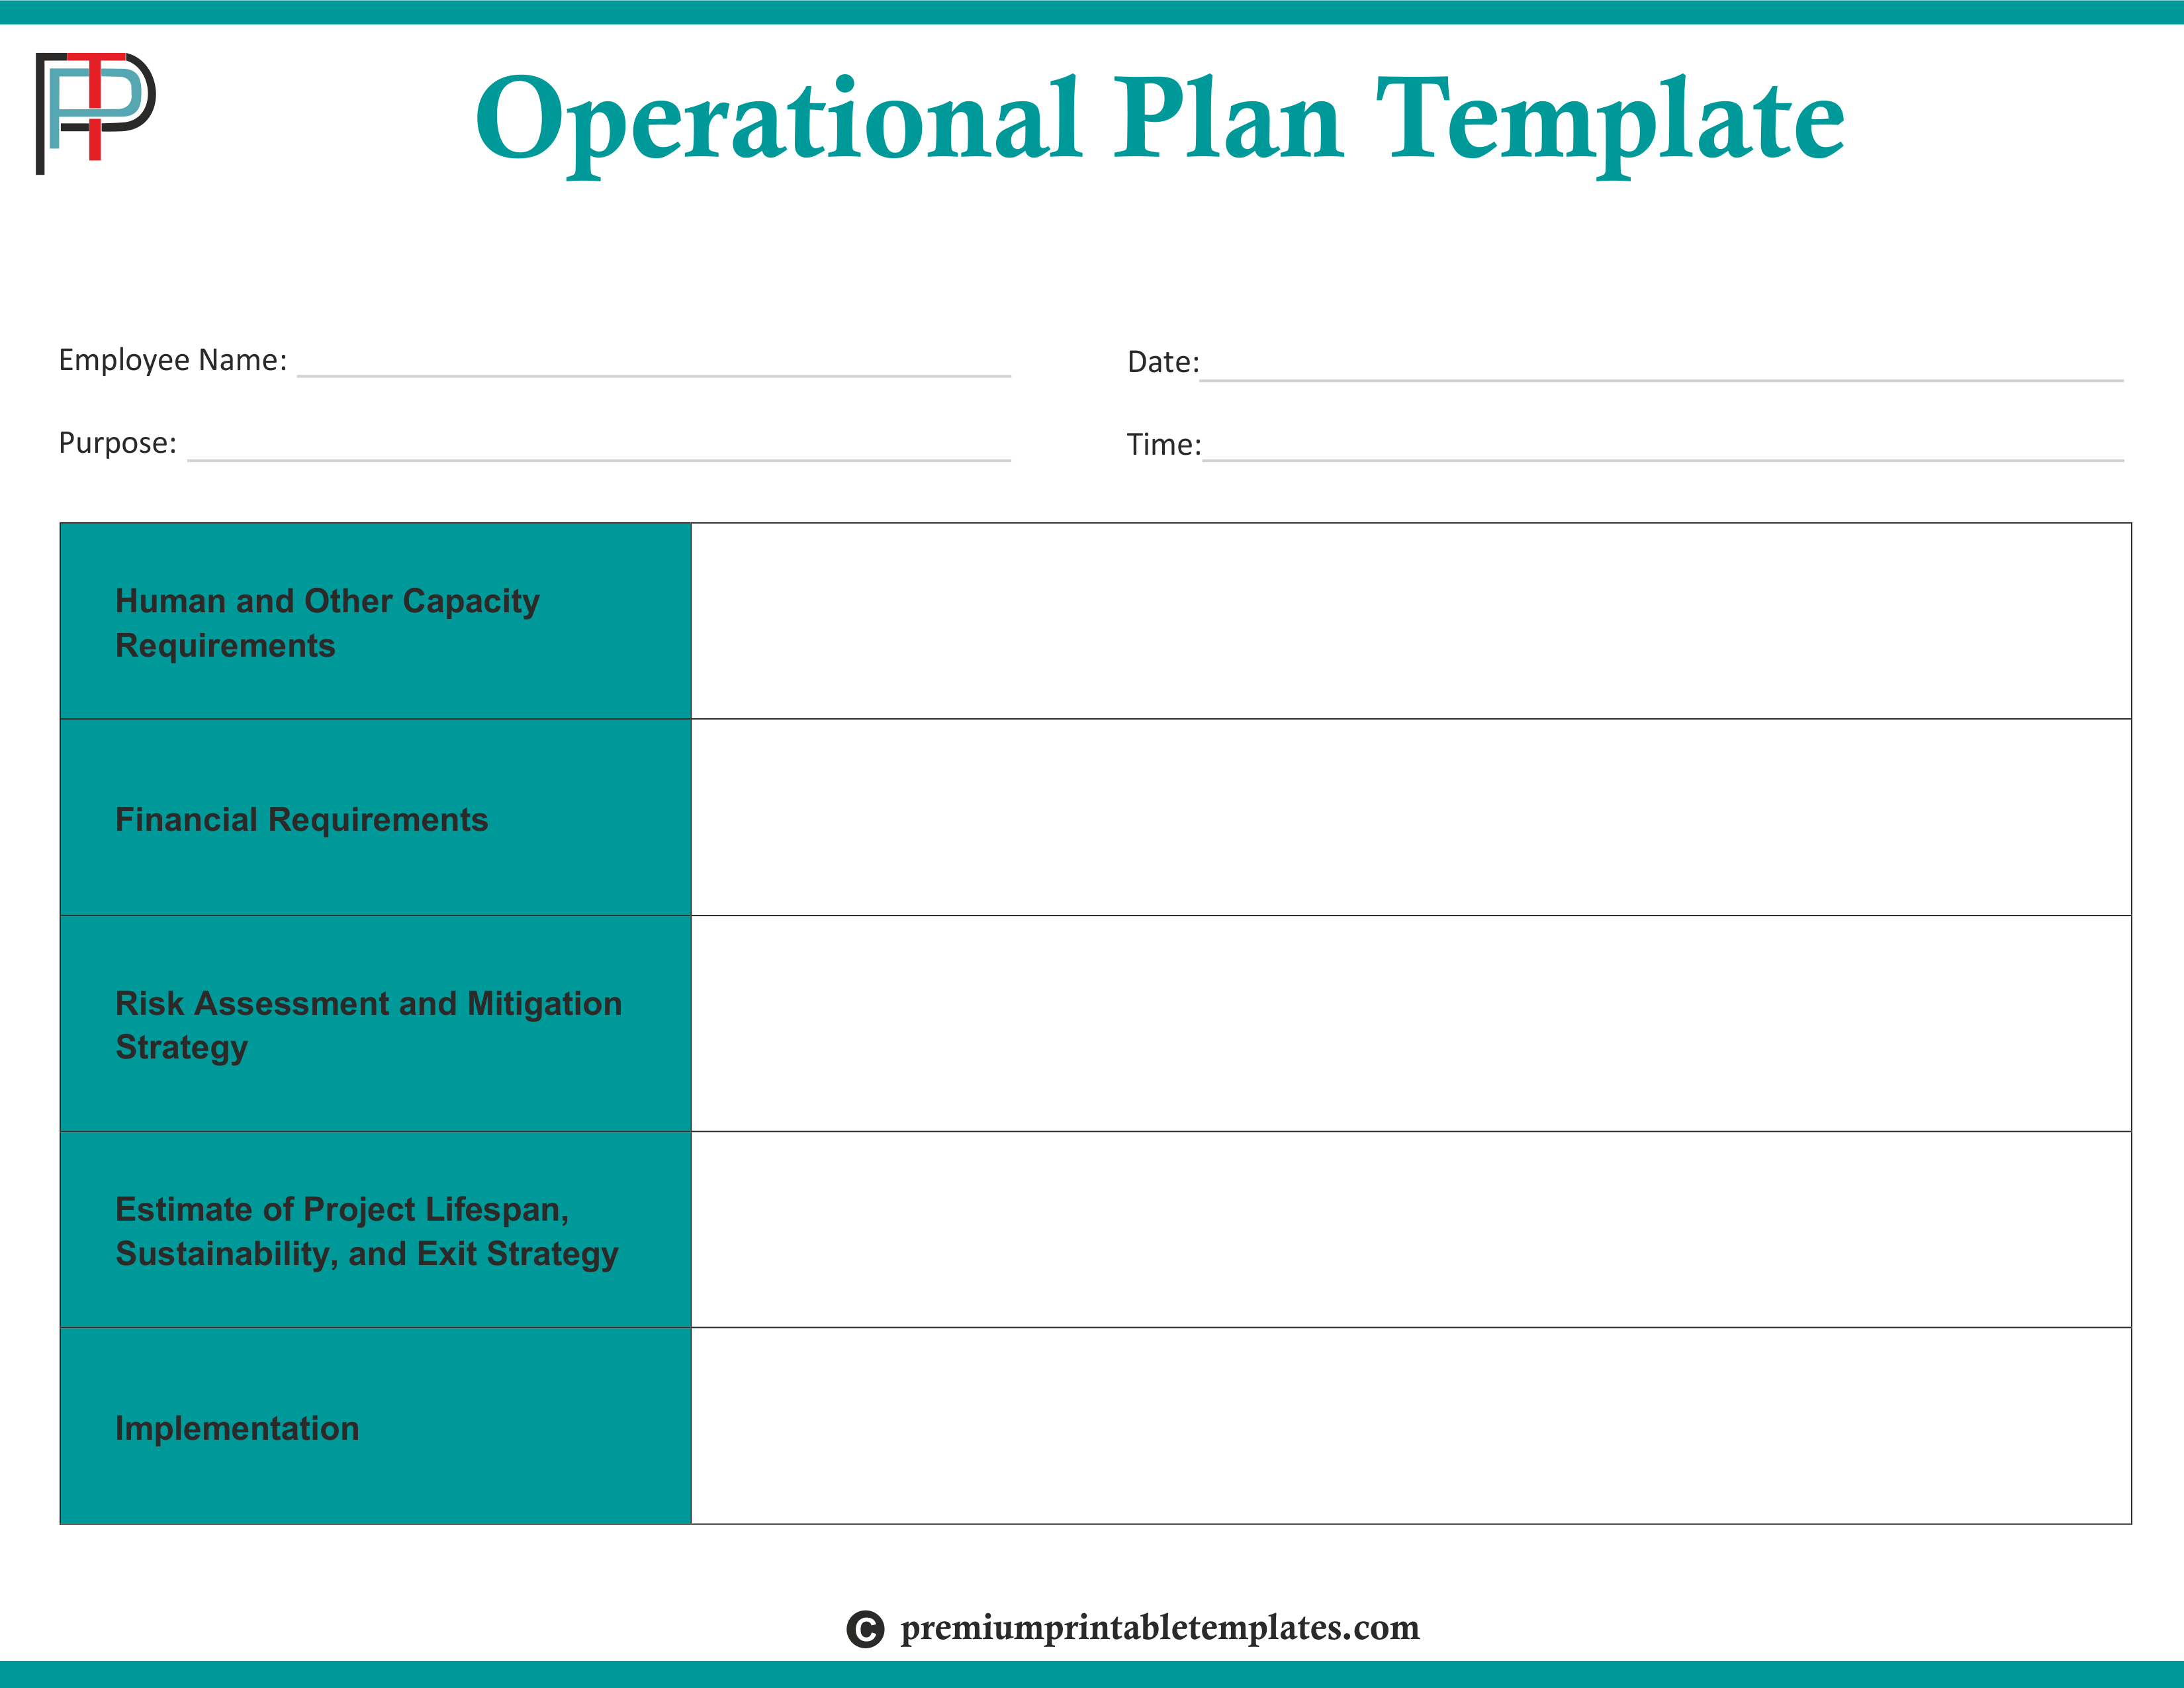 Operational Plan Template Premium Printable Templates